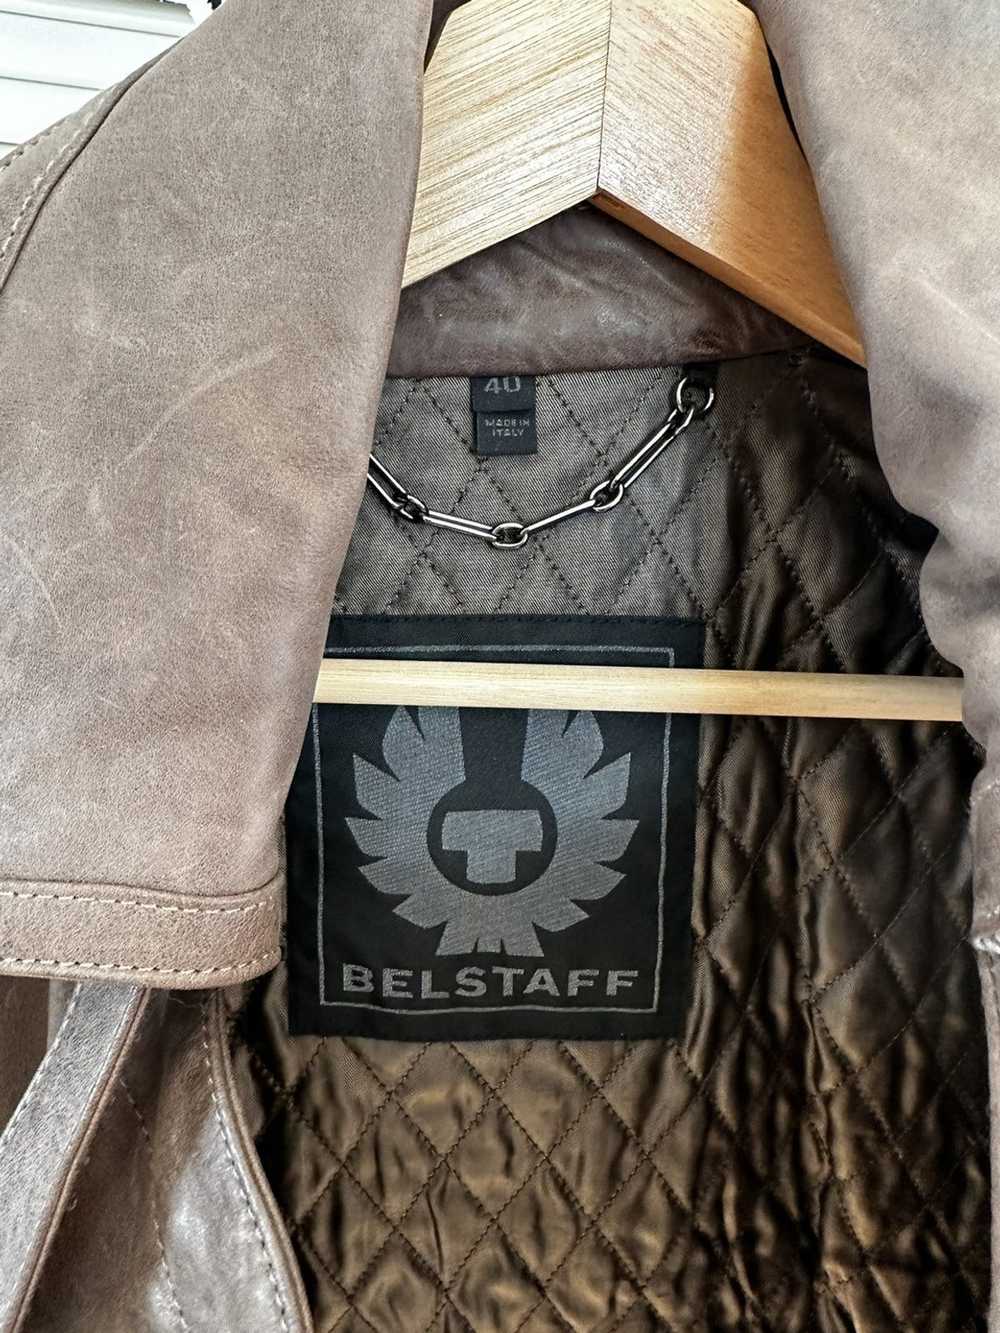 Belstaff Belstaff Woman’s Motorcycle Jacket - image 9